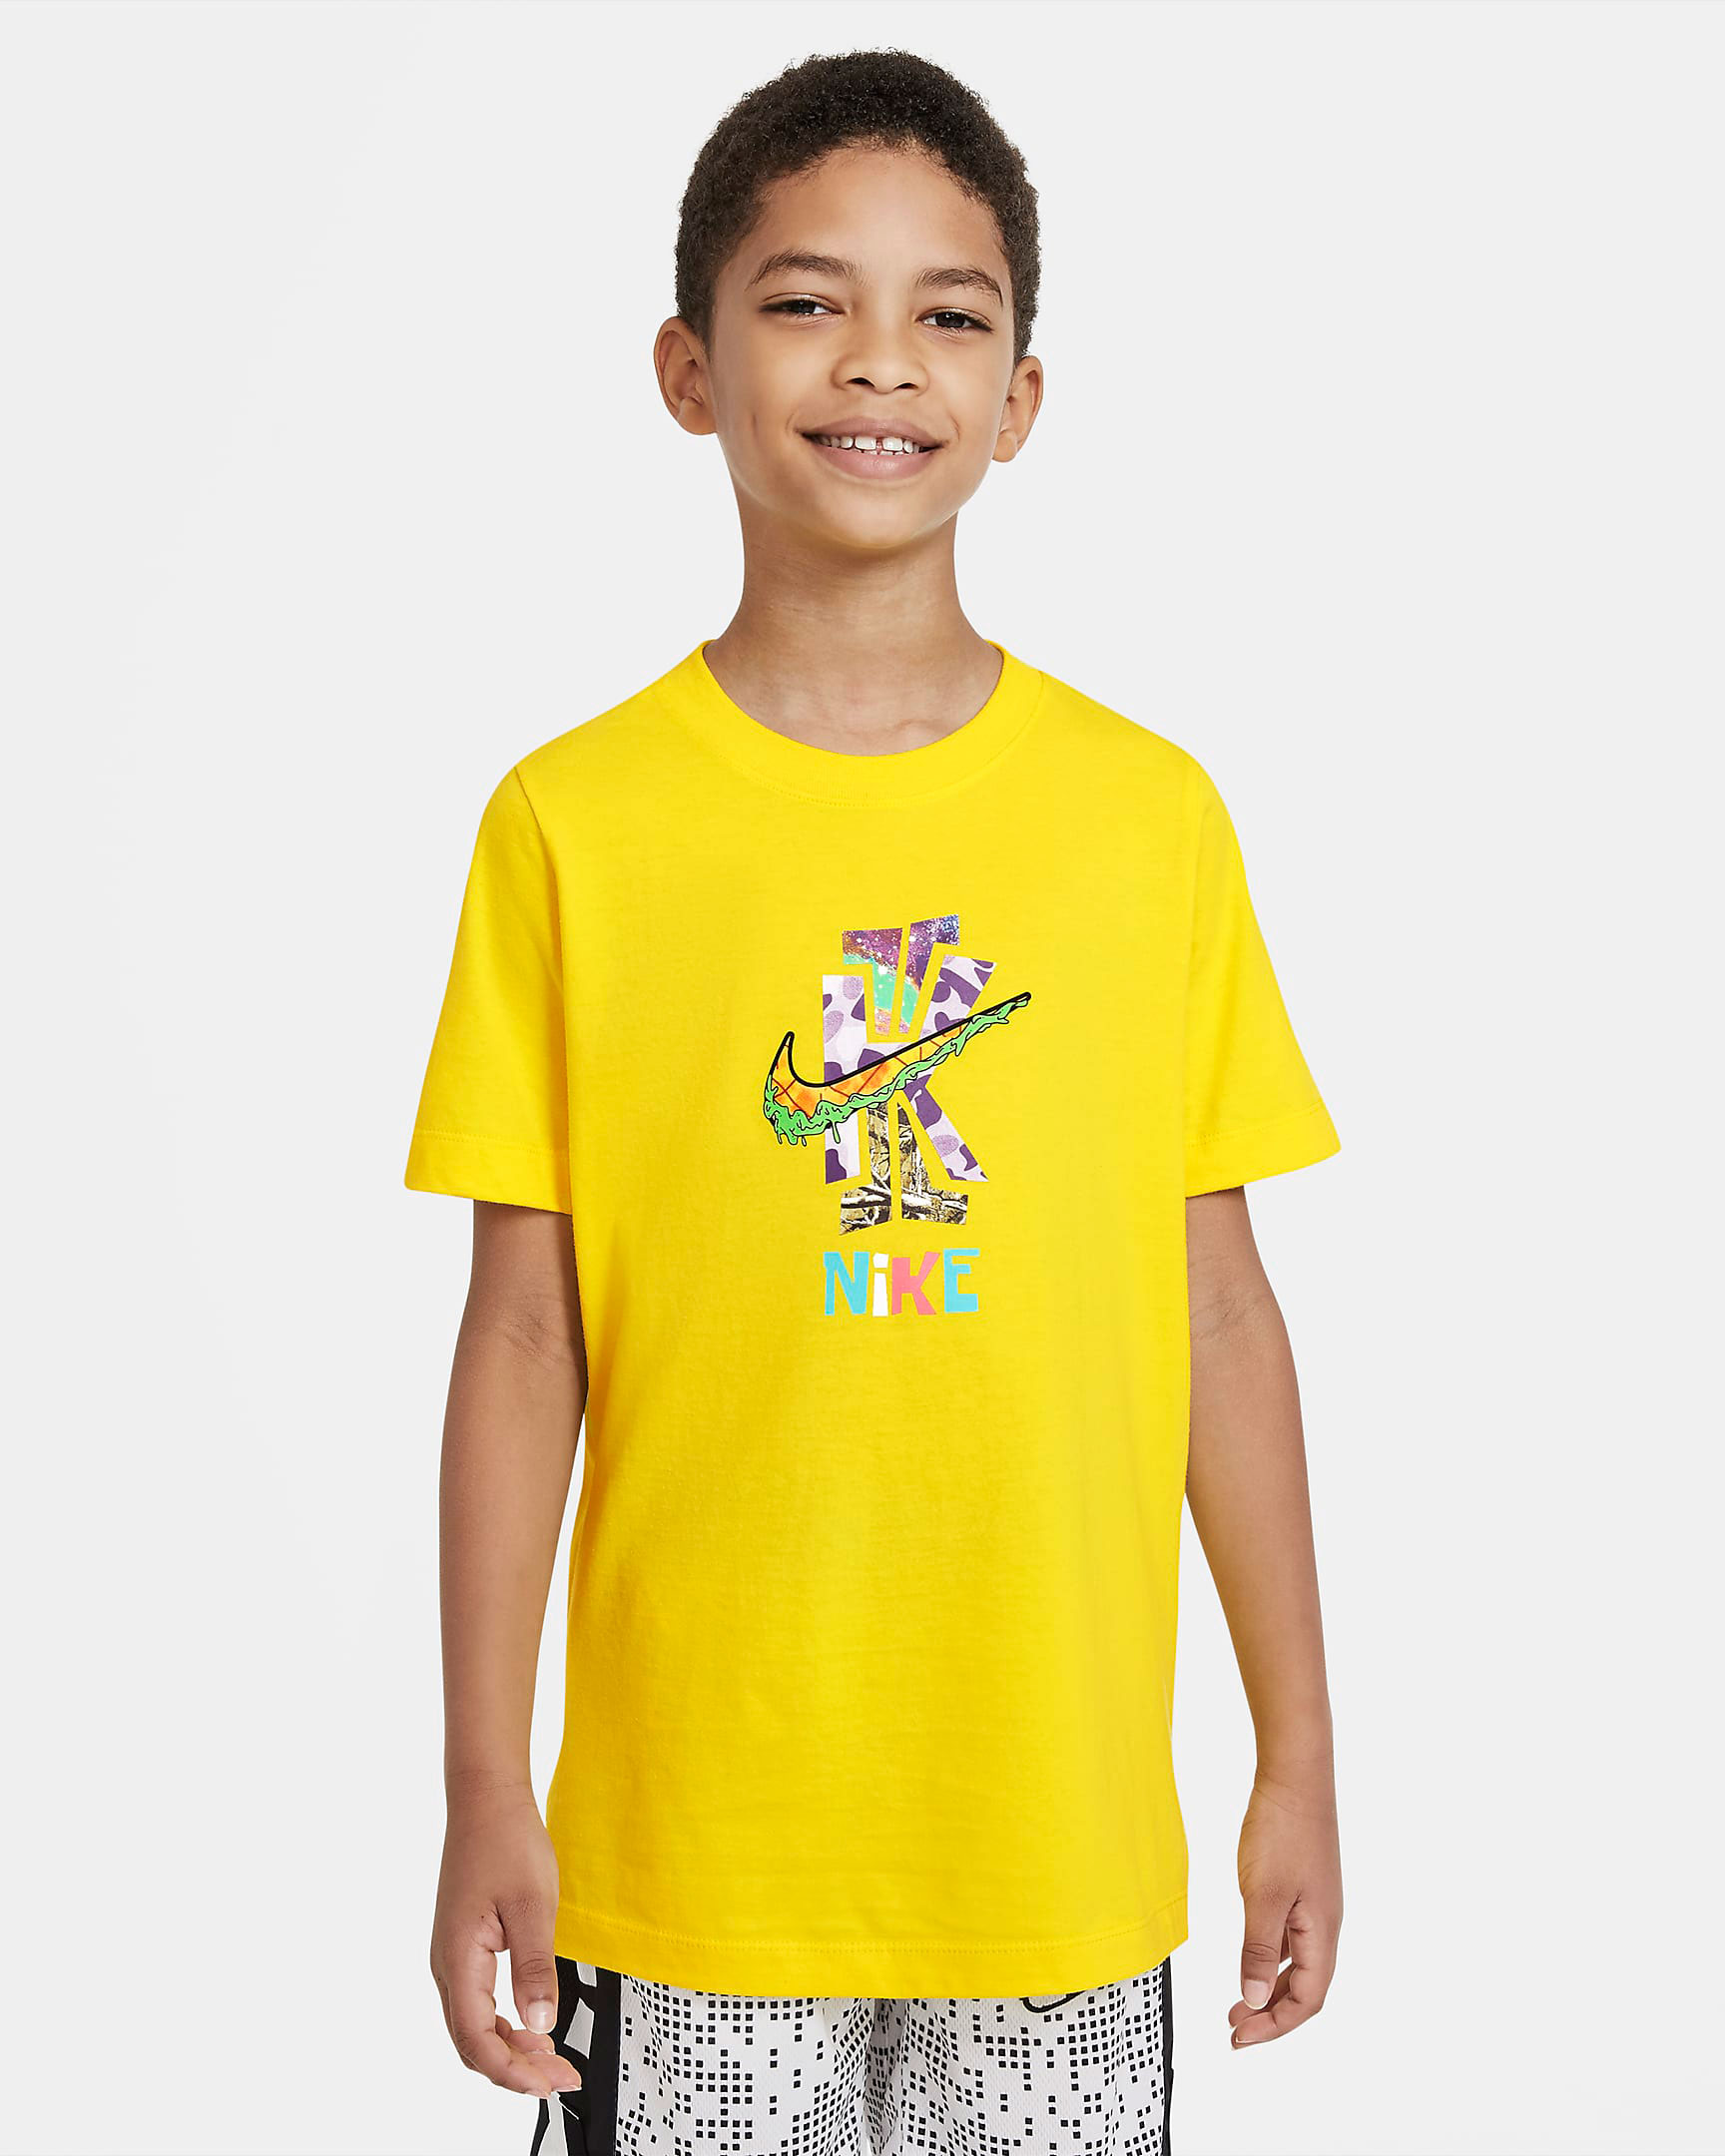 nike-kybrid-s2-pineapple-best-of-kids-shirt-yellow